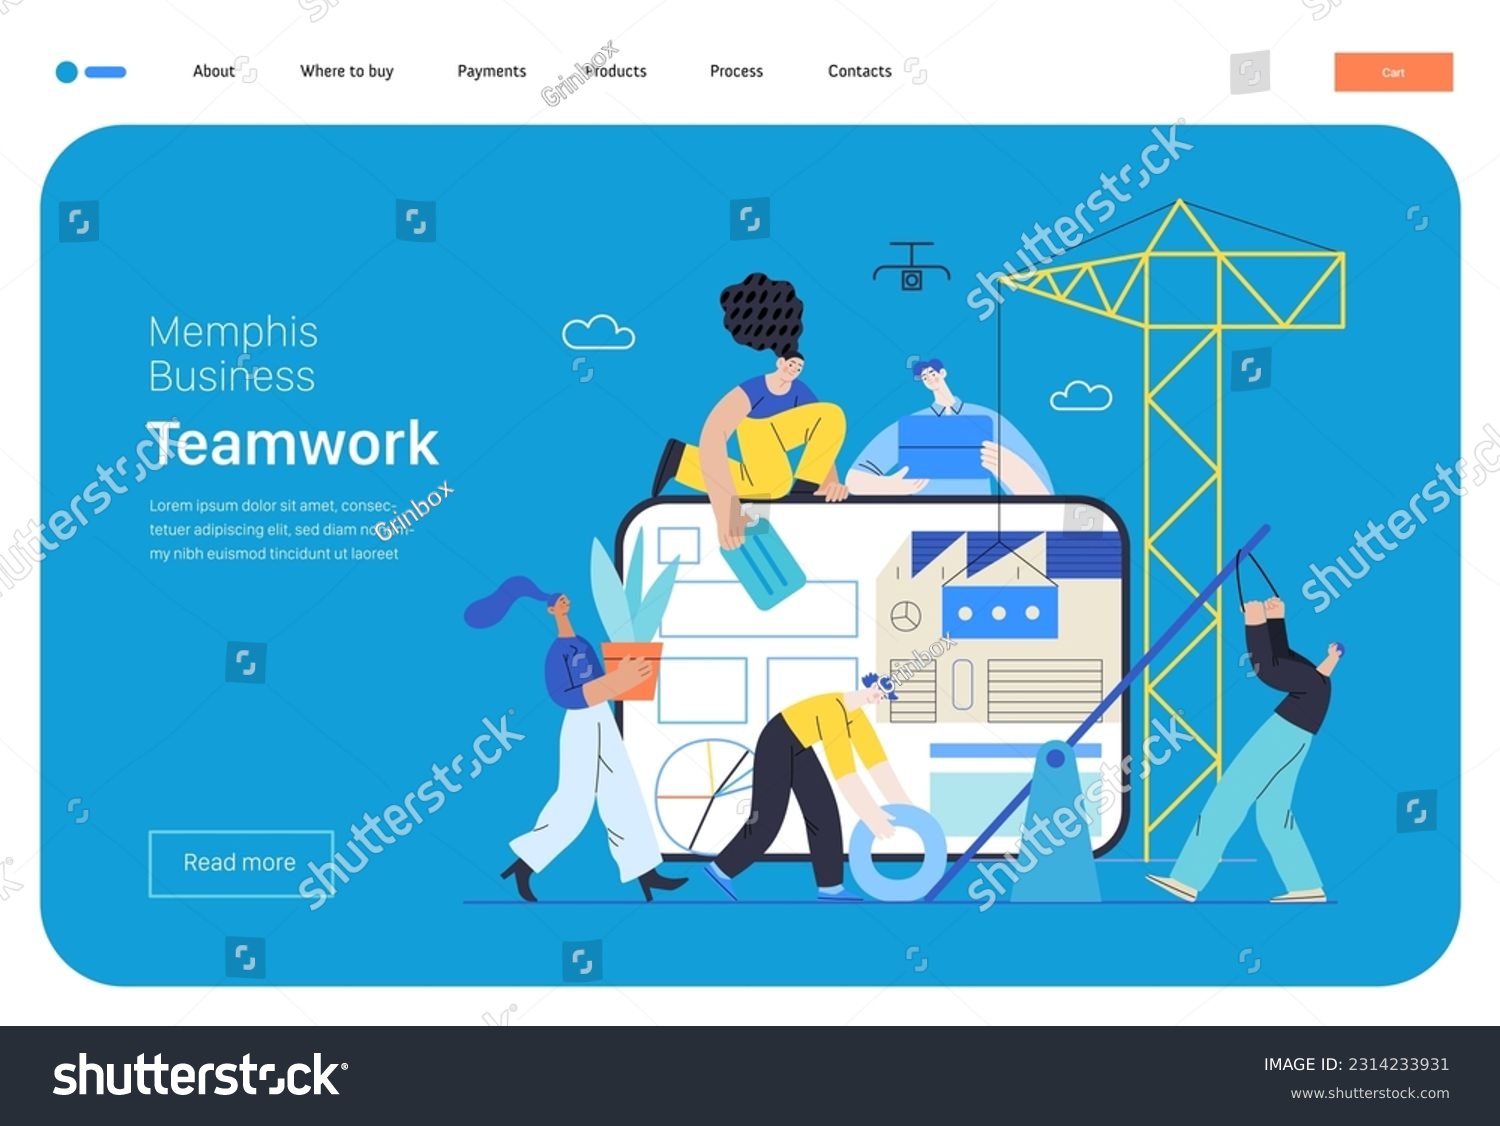 SVG of Memphis business illustration. Teamwork -modern flat vector concept illustration of people working together, building a company website, collaboration concept. Commerce business sales metaphor. svg